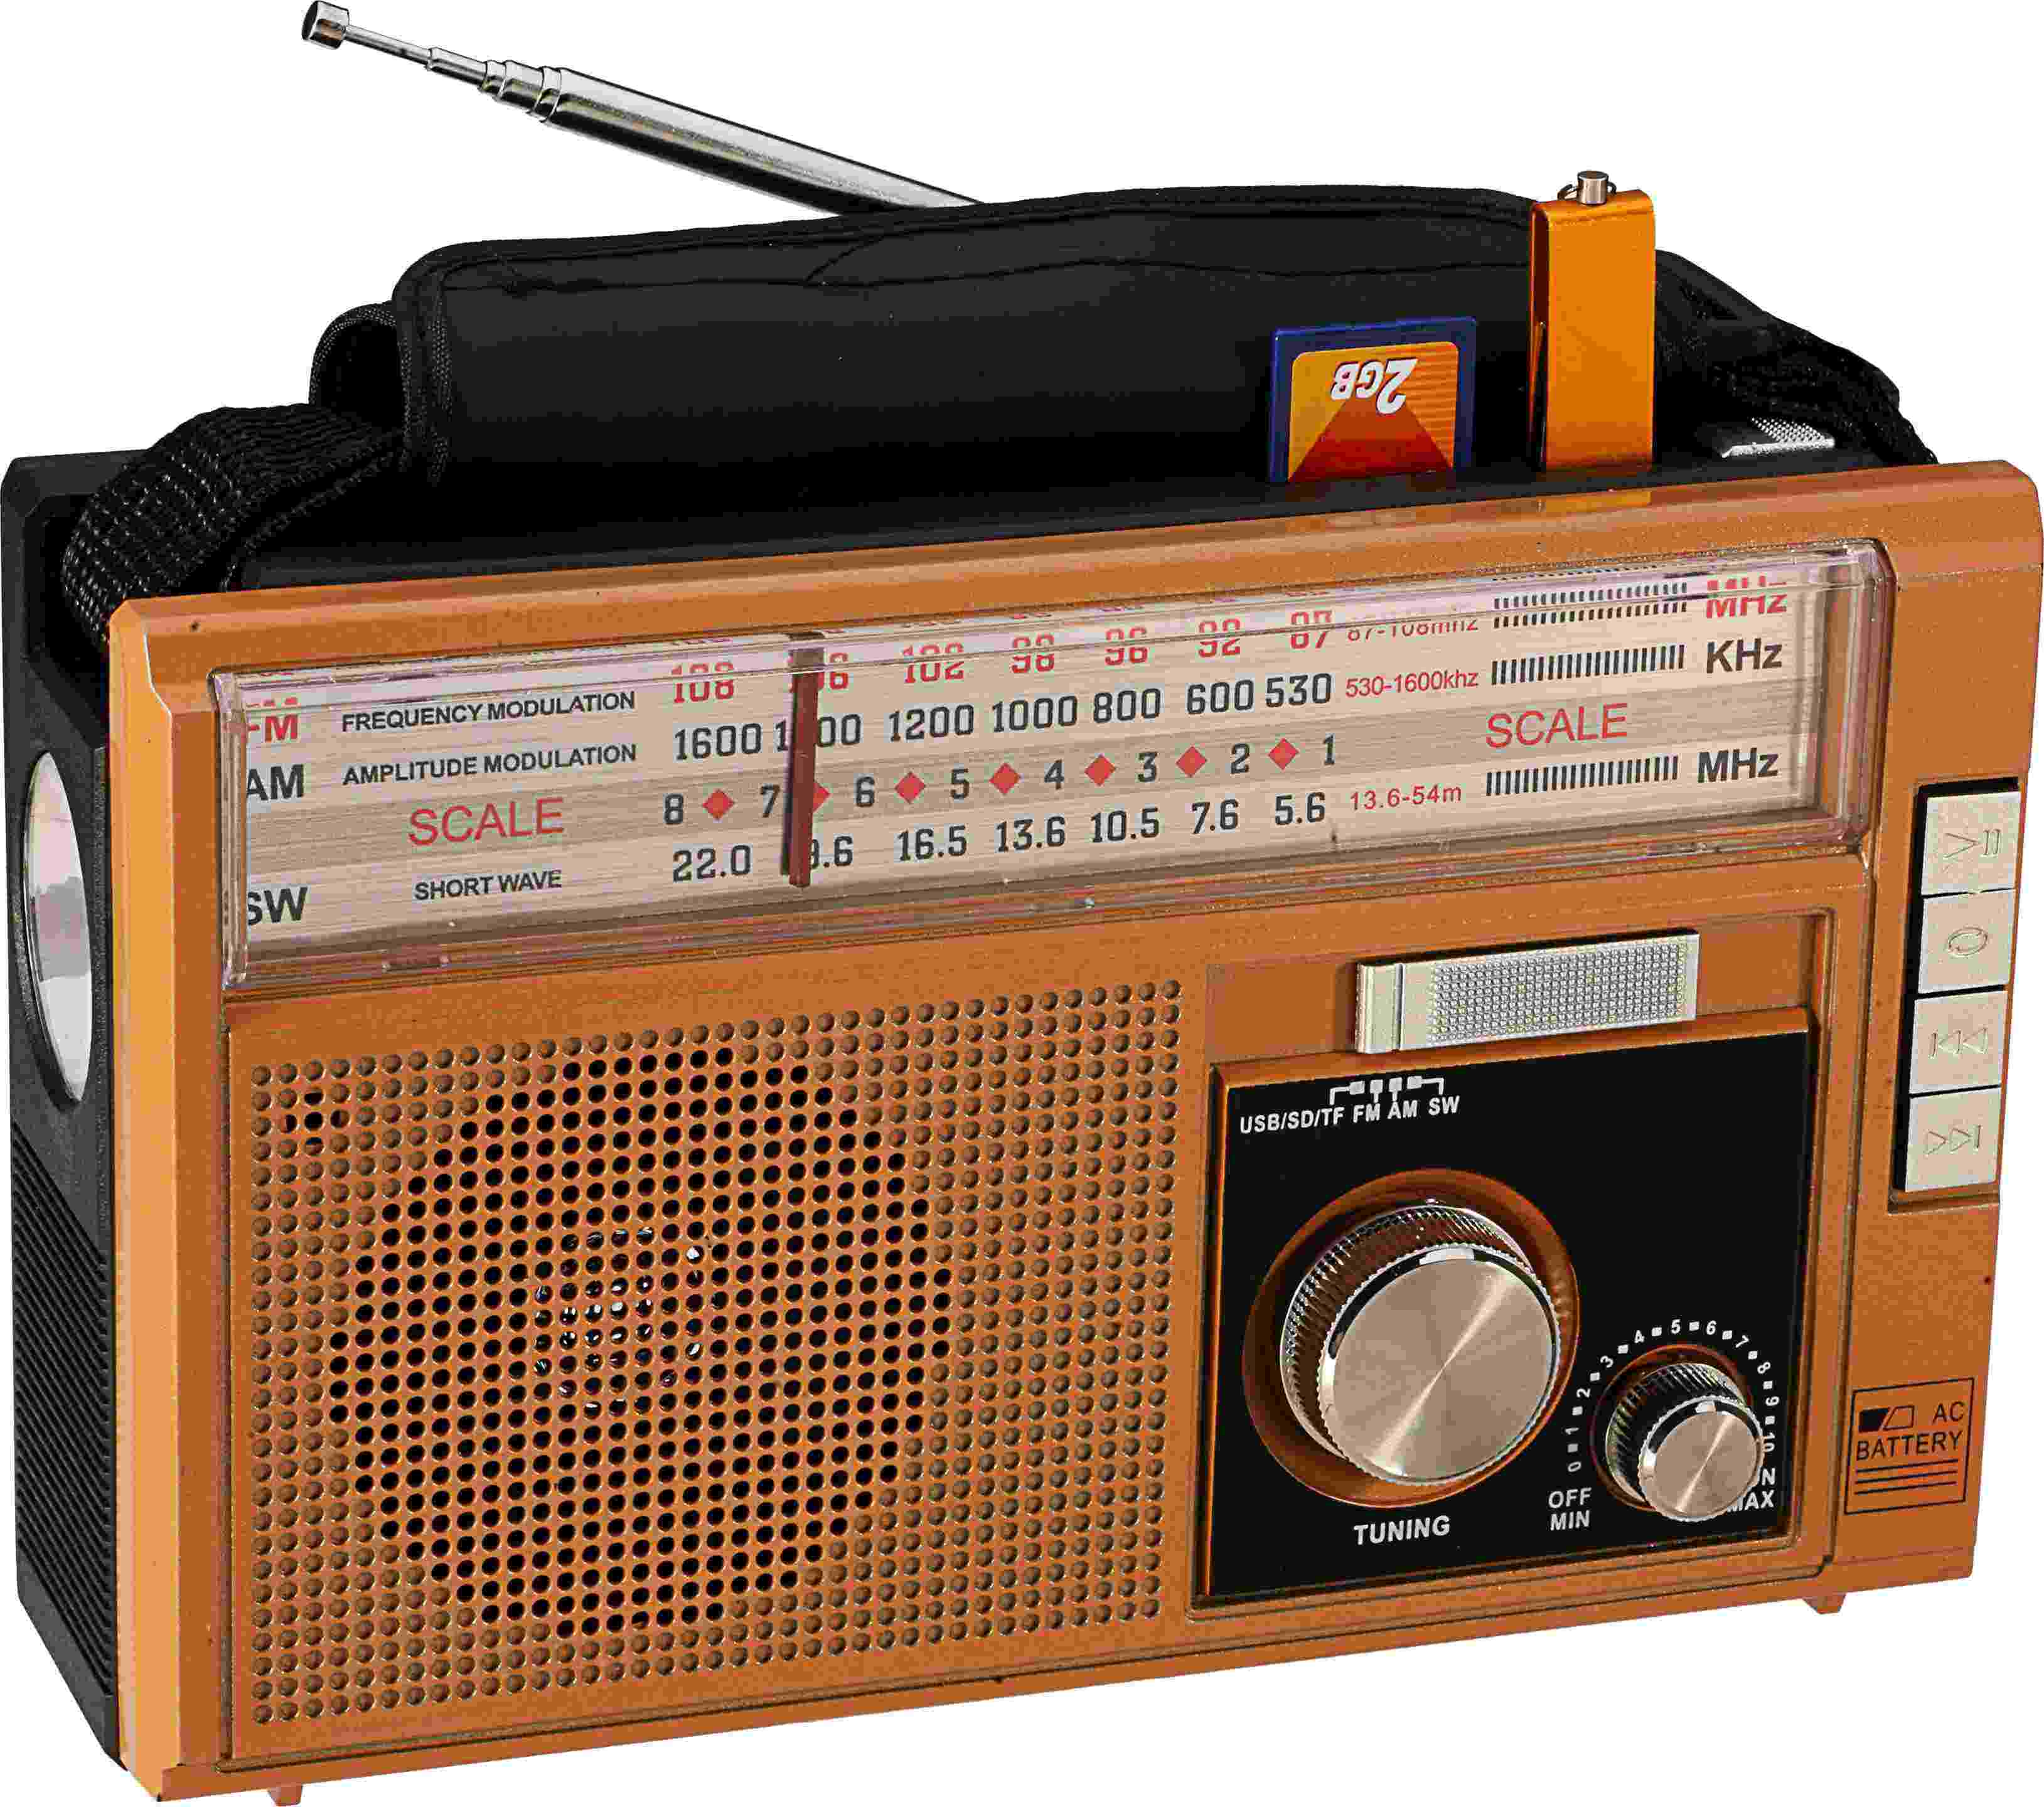 HS-2942Hot Sale AM FM SW radio wireless bluetooth radios with usb tf card